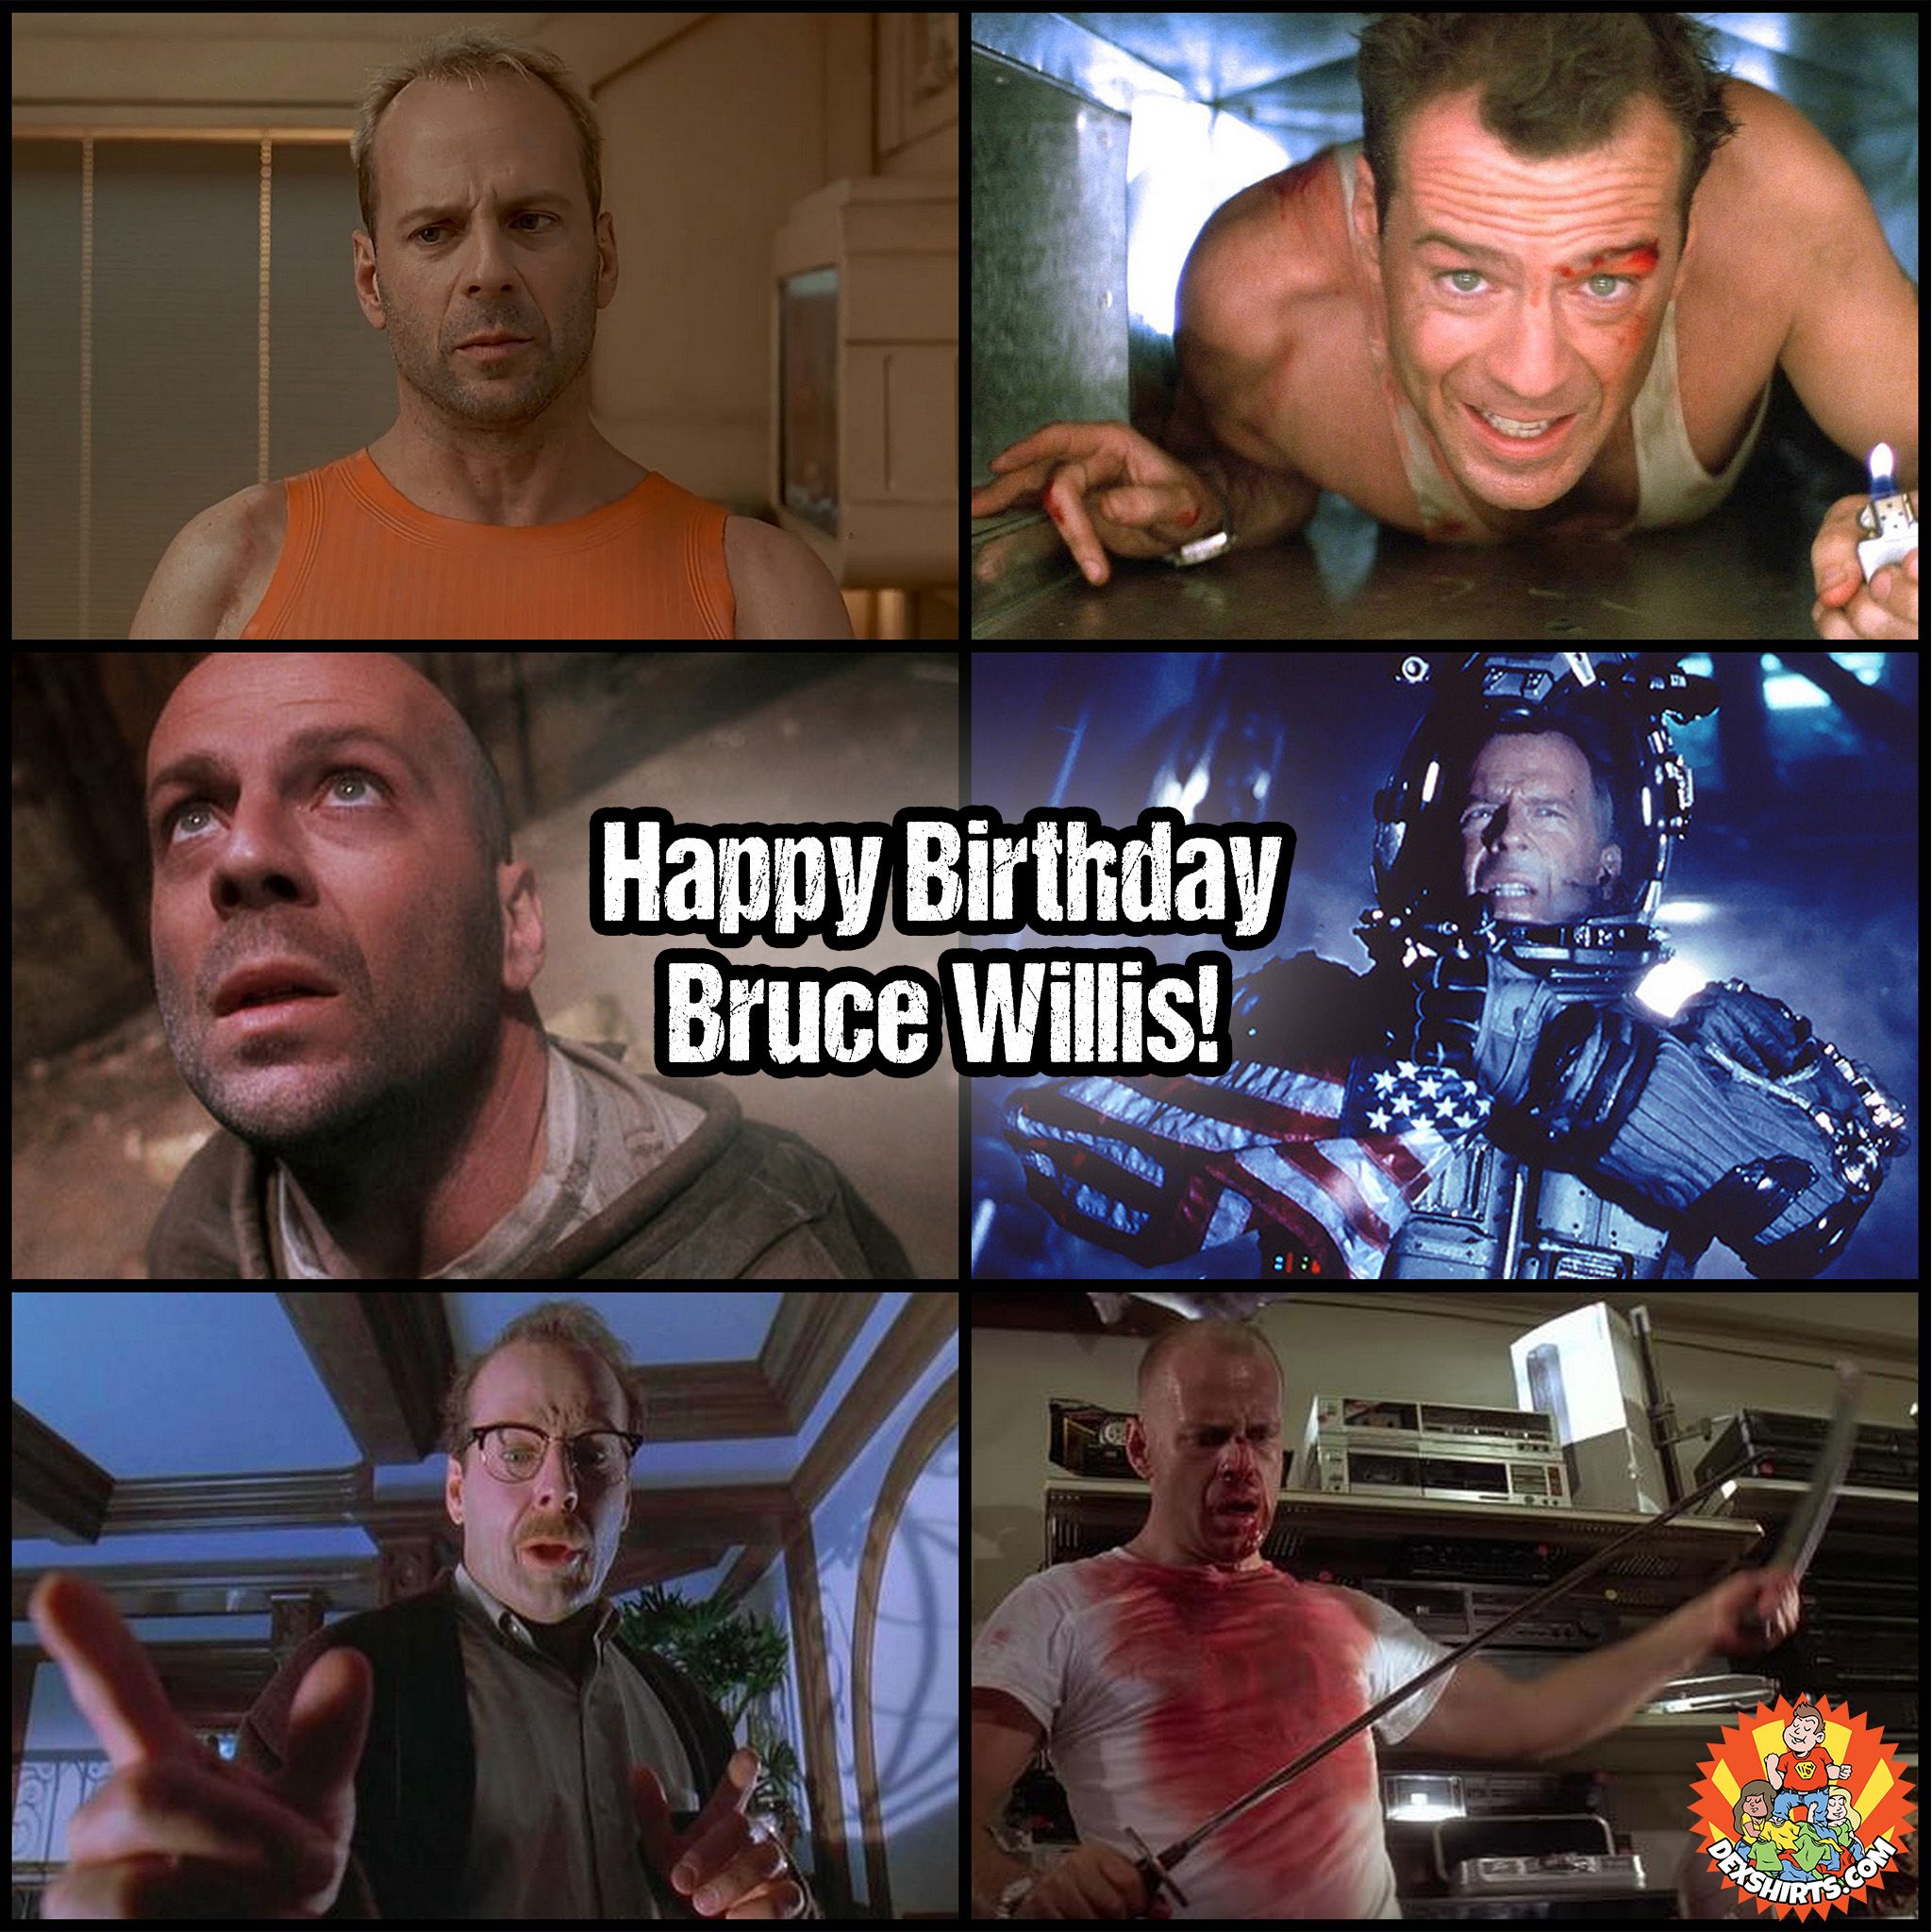 Happy Birthday, Bruce Willis! 62 today. Yippie Ki Yay! 